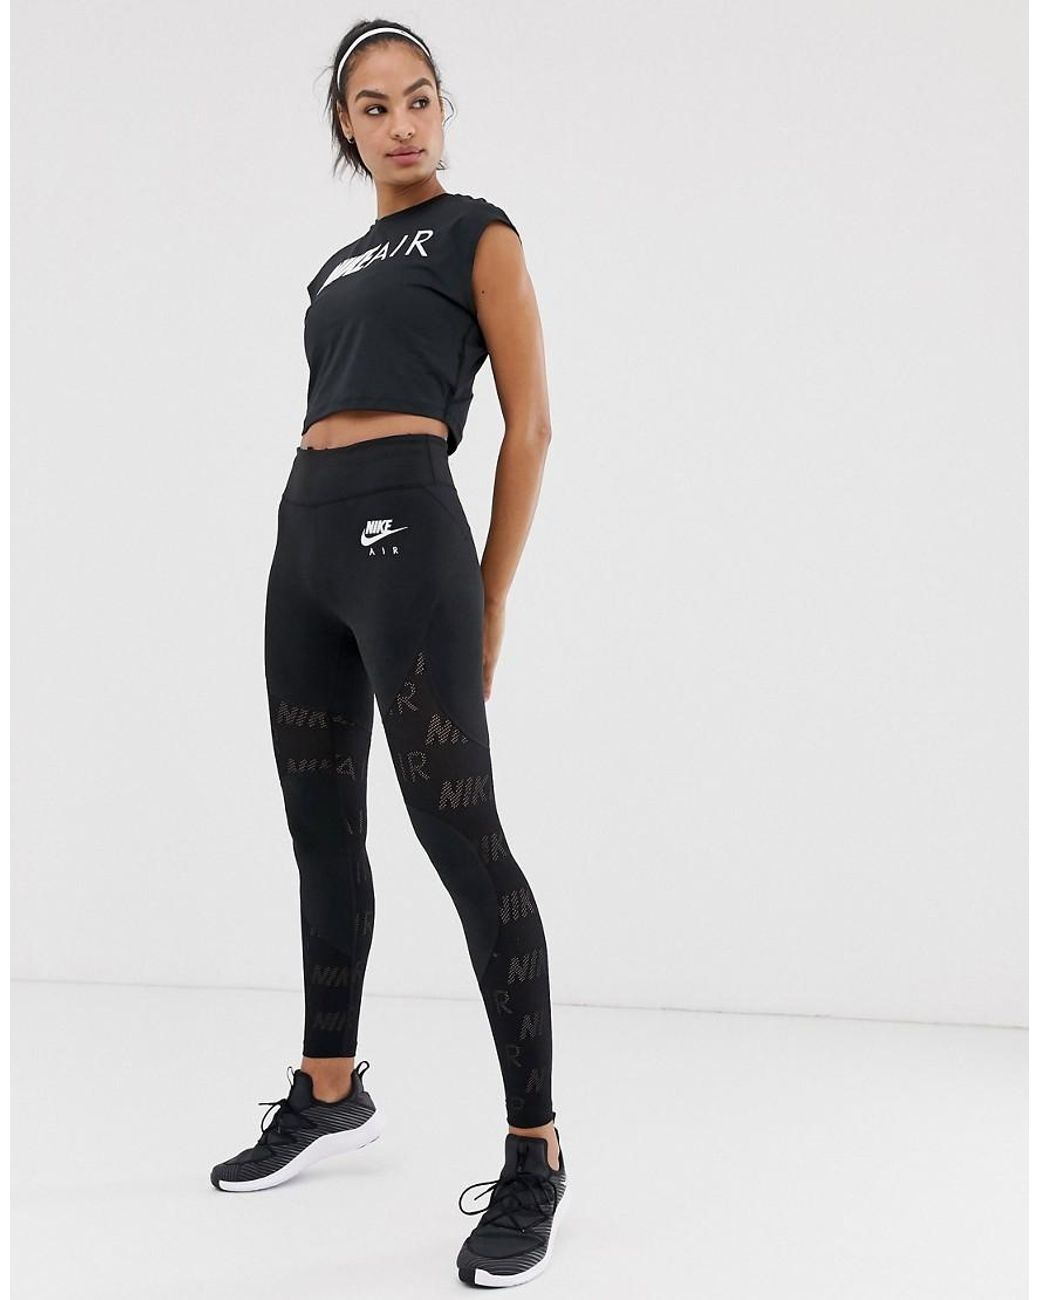 Nike Running Leggings With Mesh Panels In Black Lyst